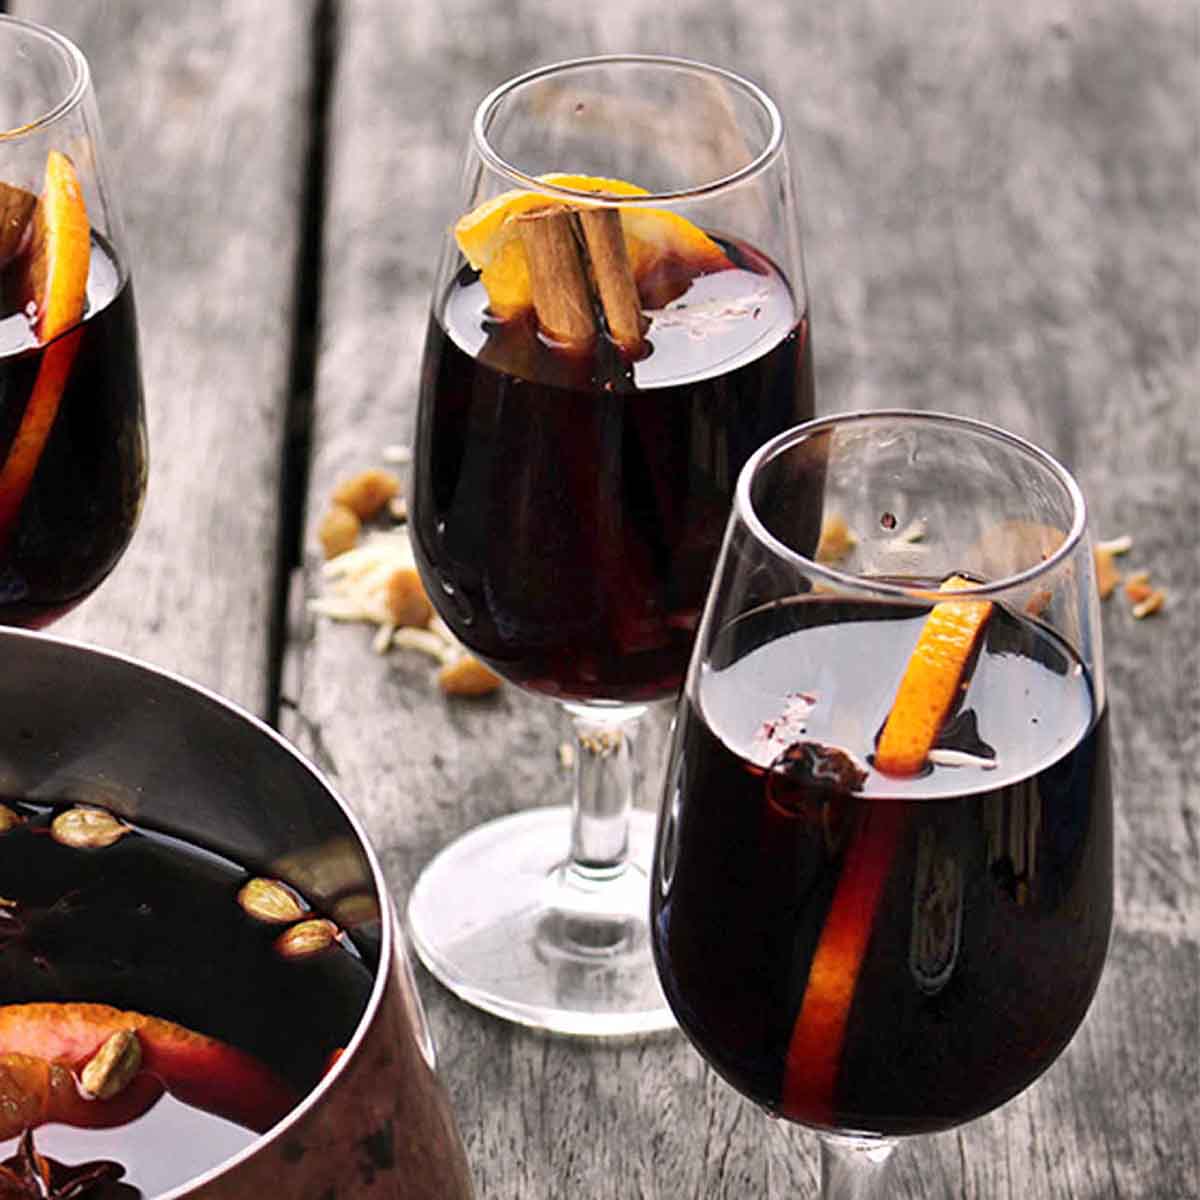 Three glasses of glogg (mulled wine) with orange slices and cinnamon sticks.